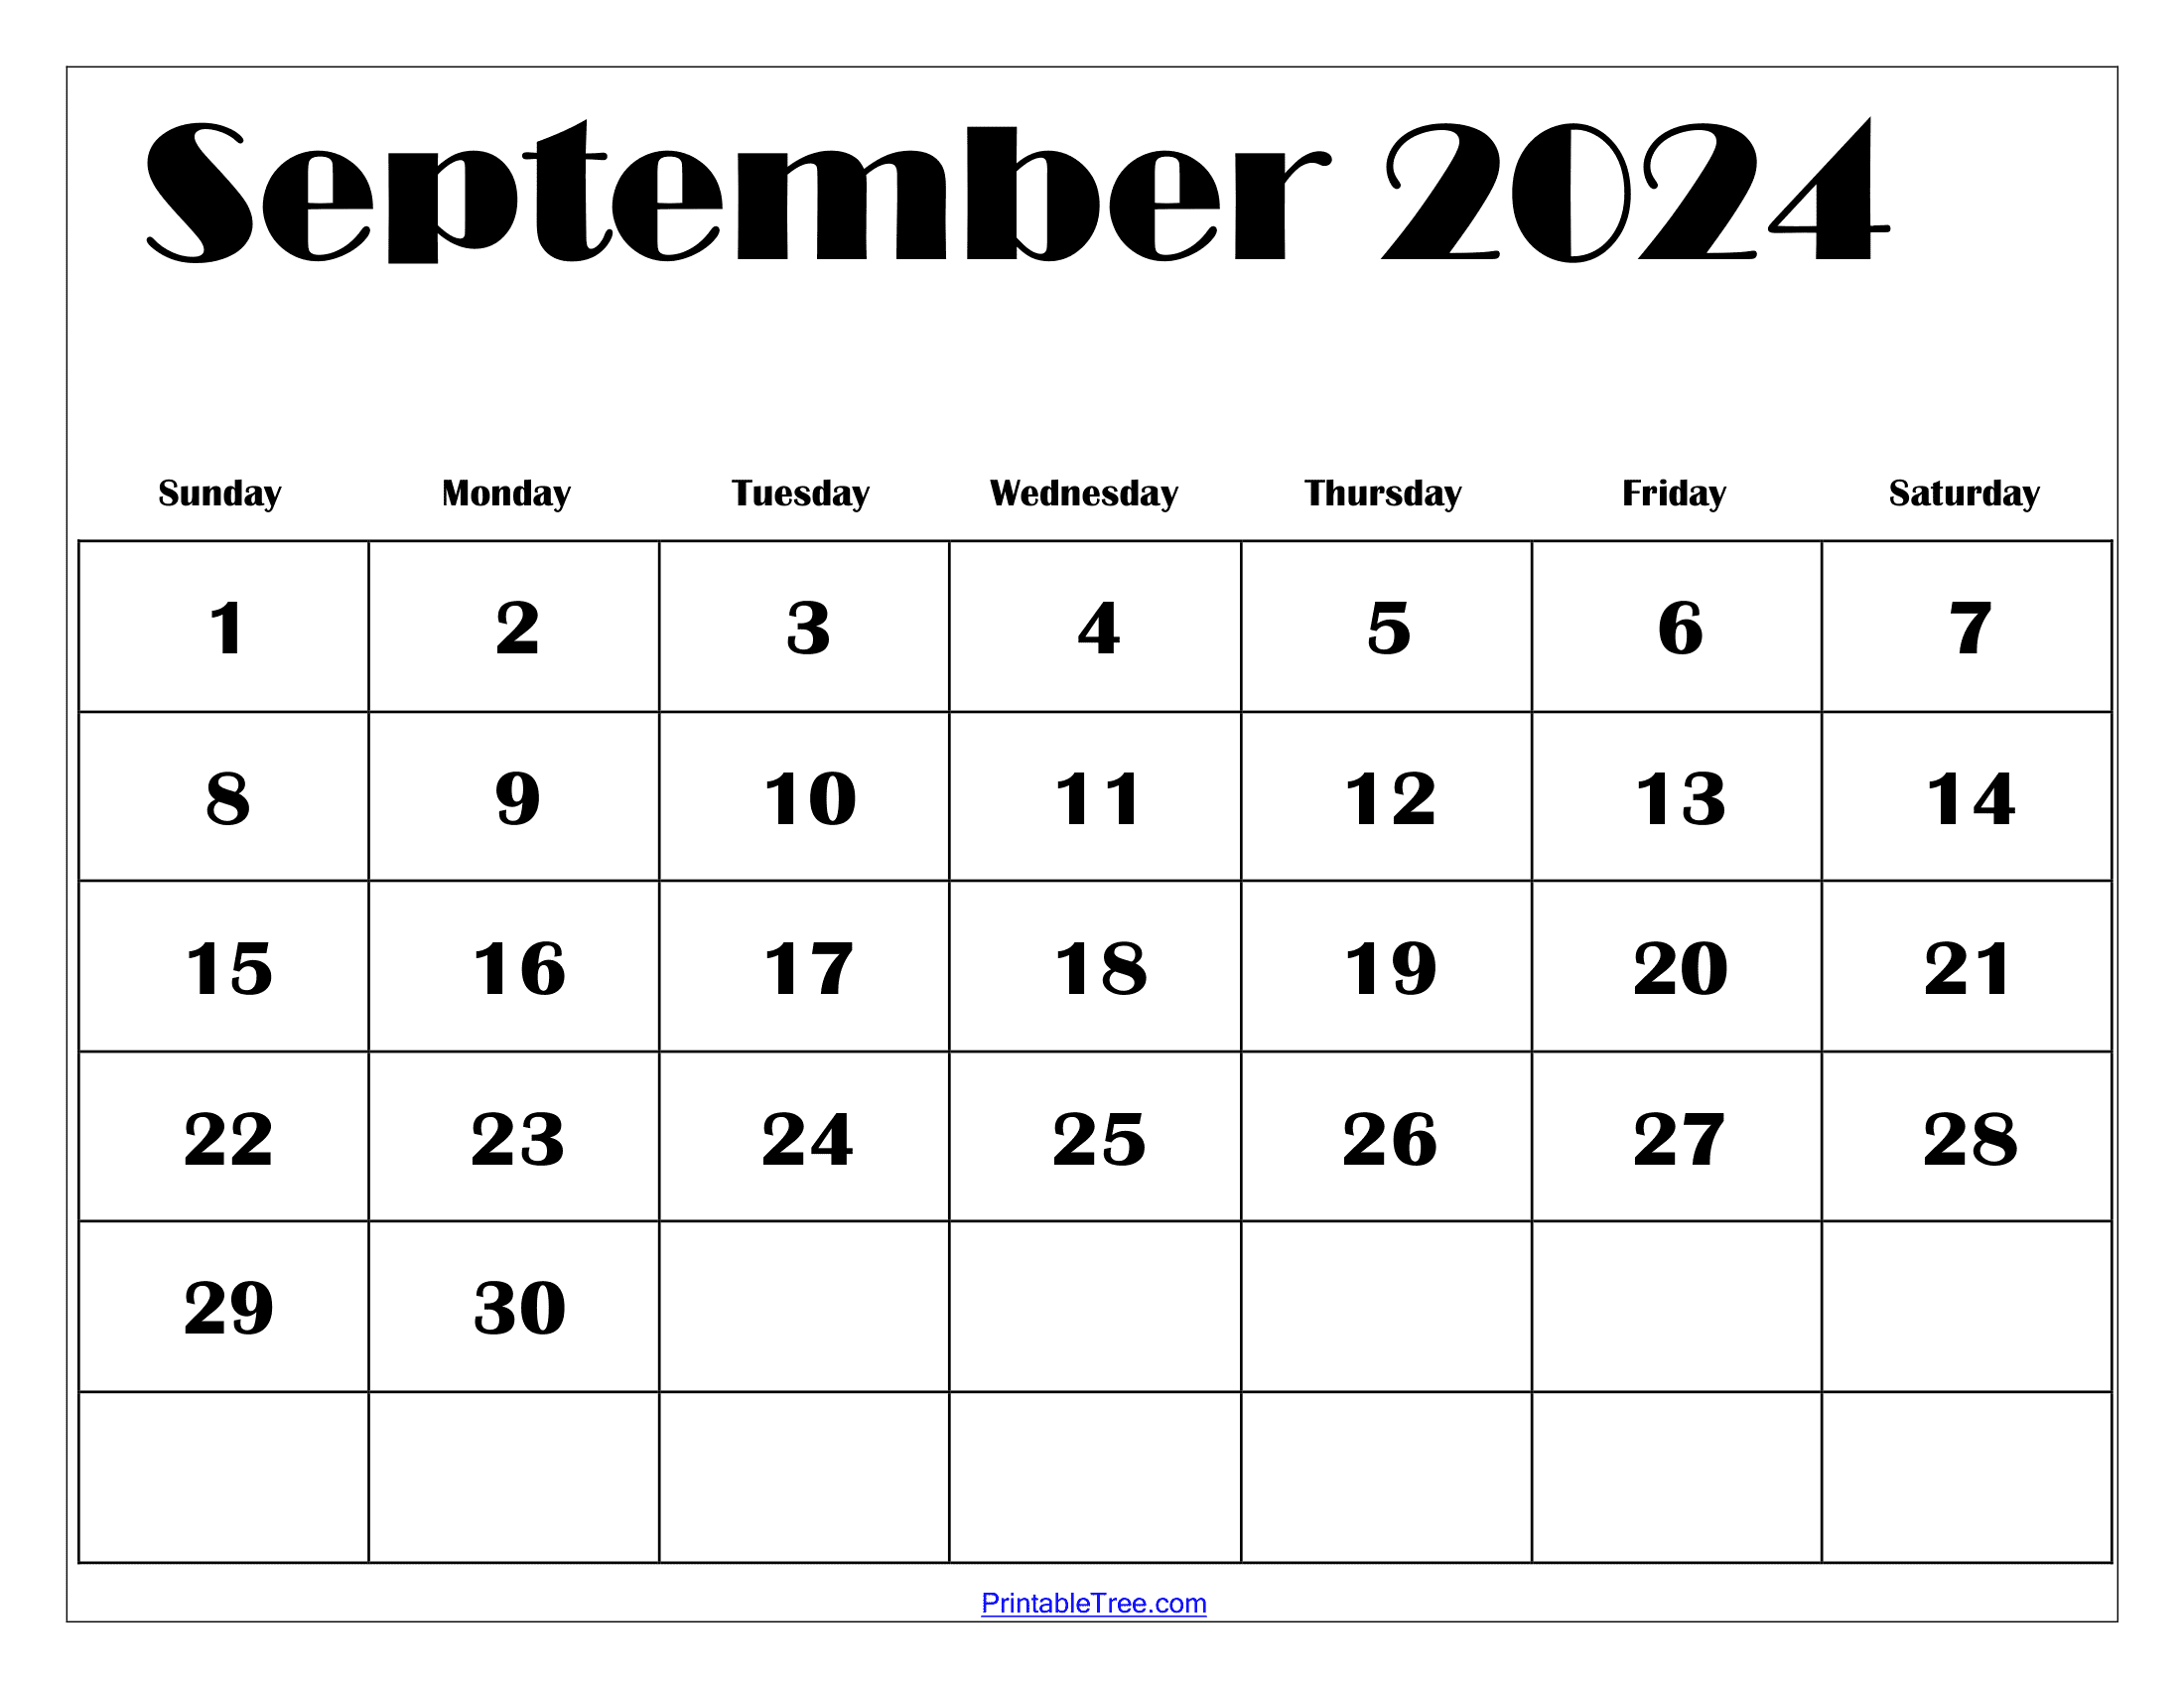 September 2024 Calendar Printable Pdf With Holidays for Printable Calendar 2024 September